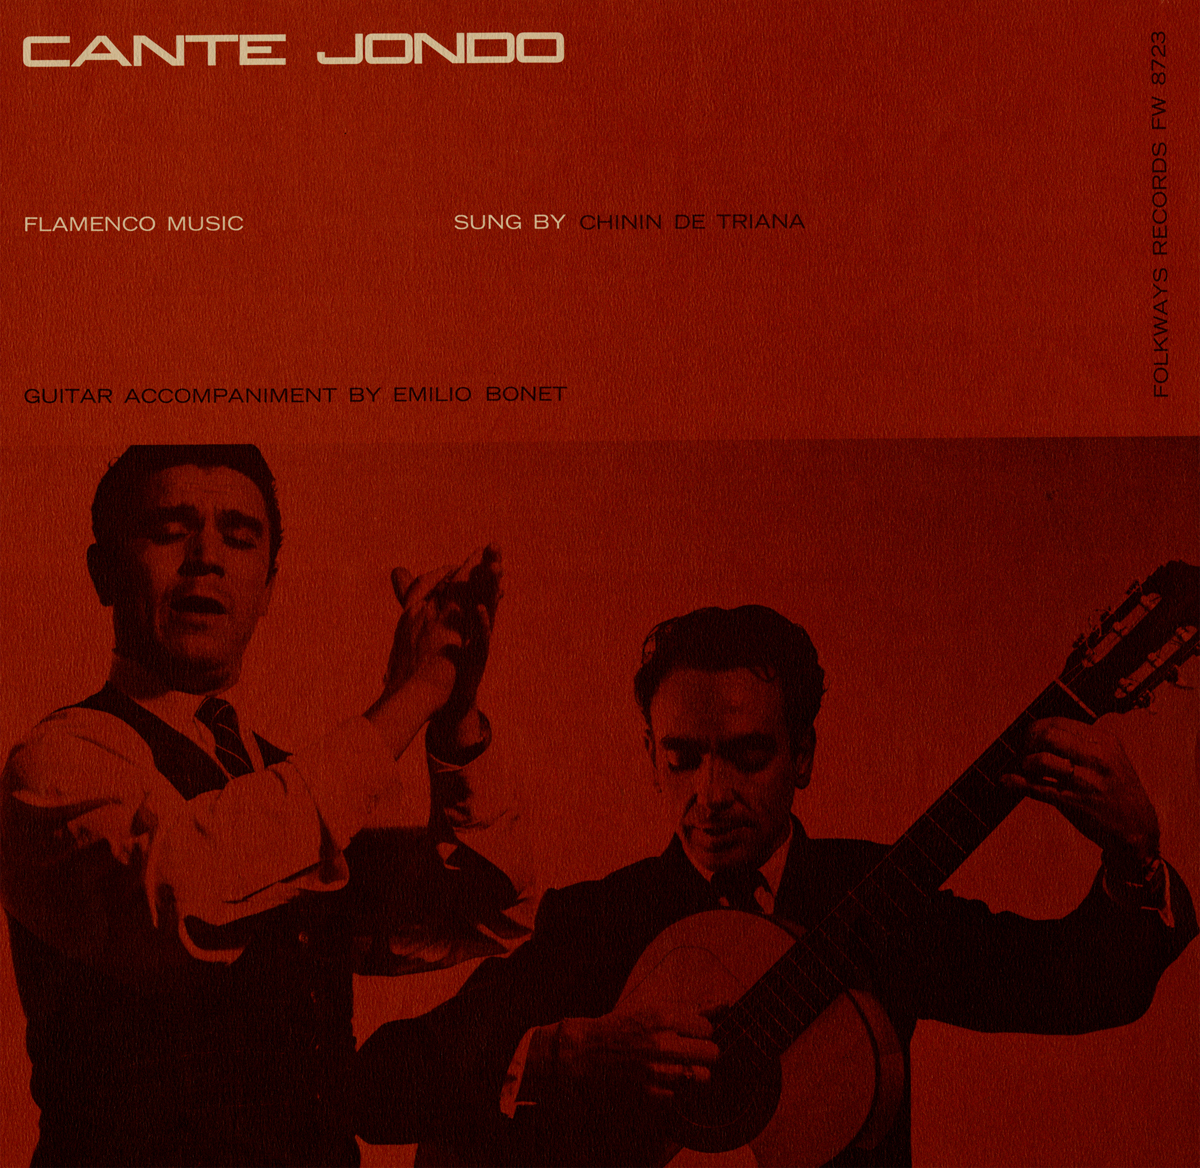 CANTE JONDO: FLAMENCO MUSIC